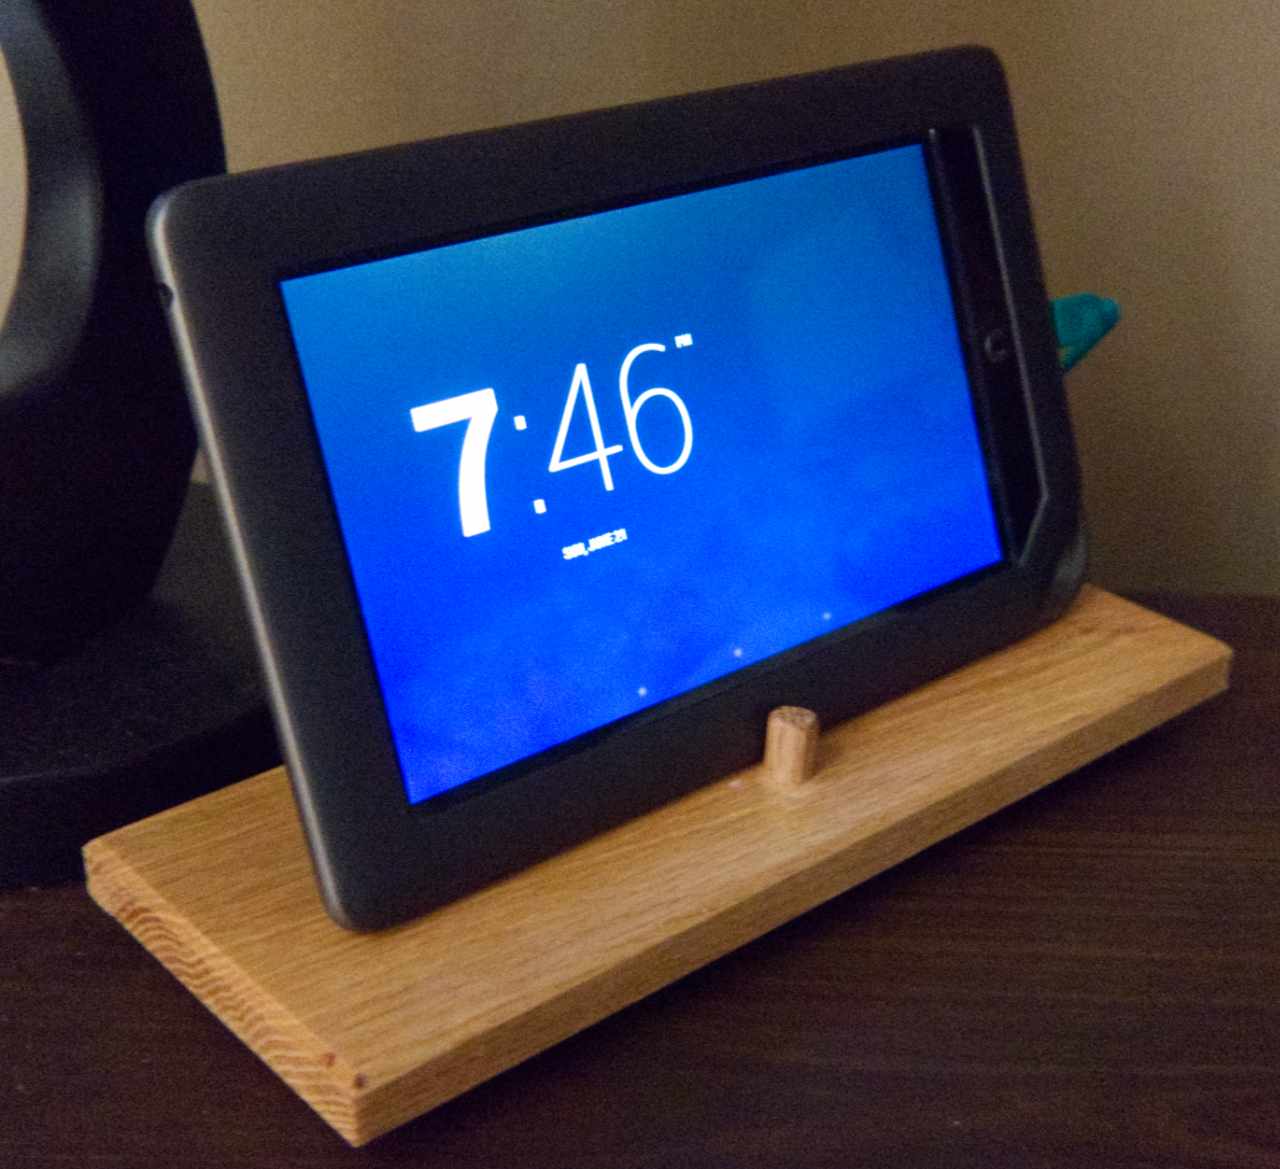 Reusing an old tablet as an alarm clock